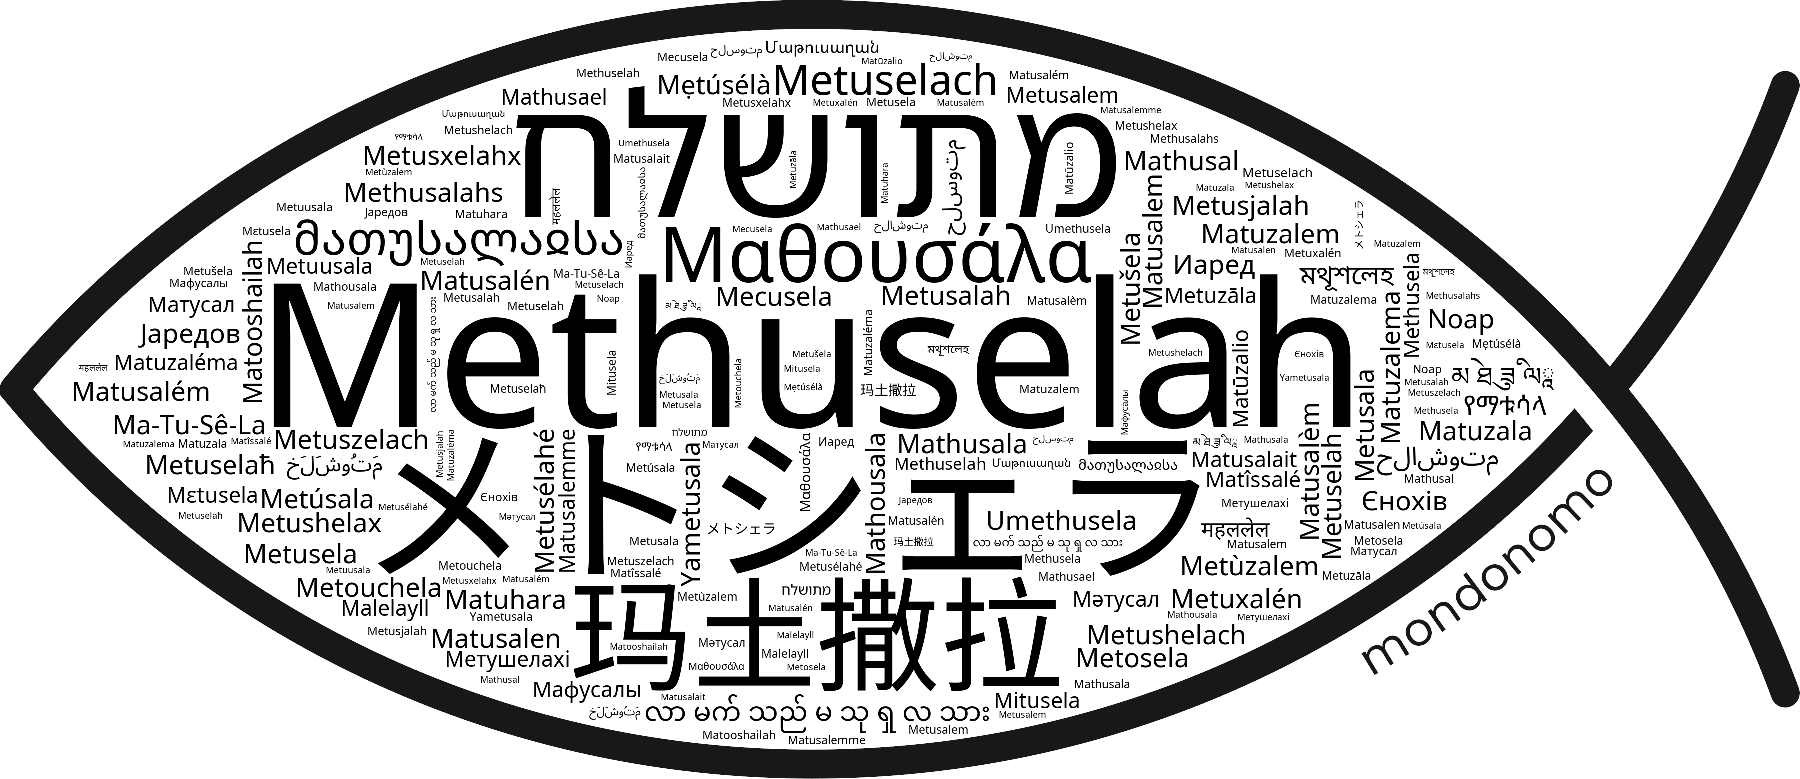 Name Methuselah in the world's Bibles